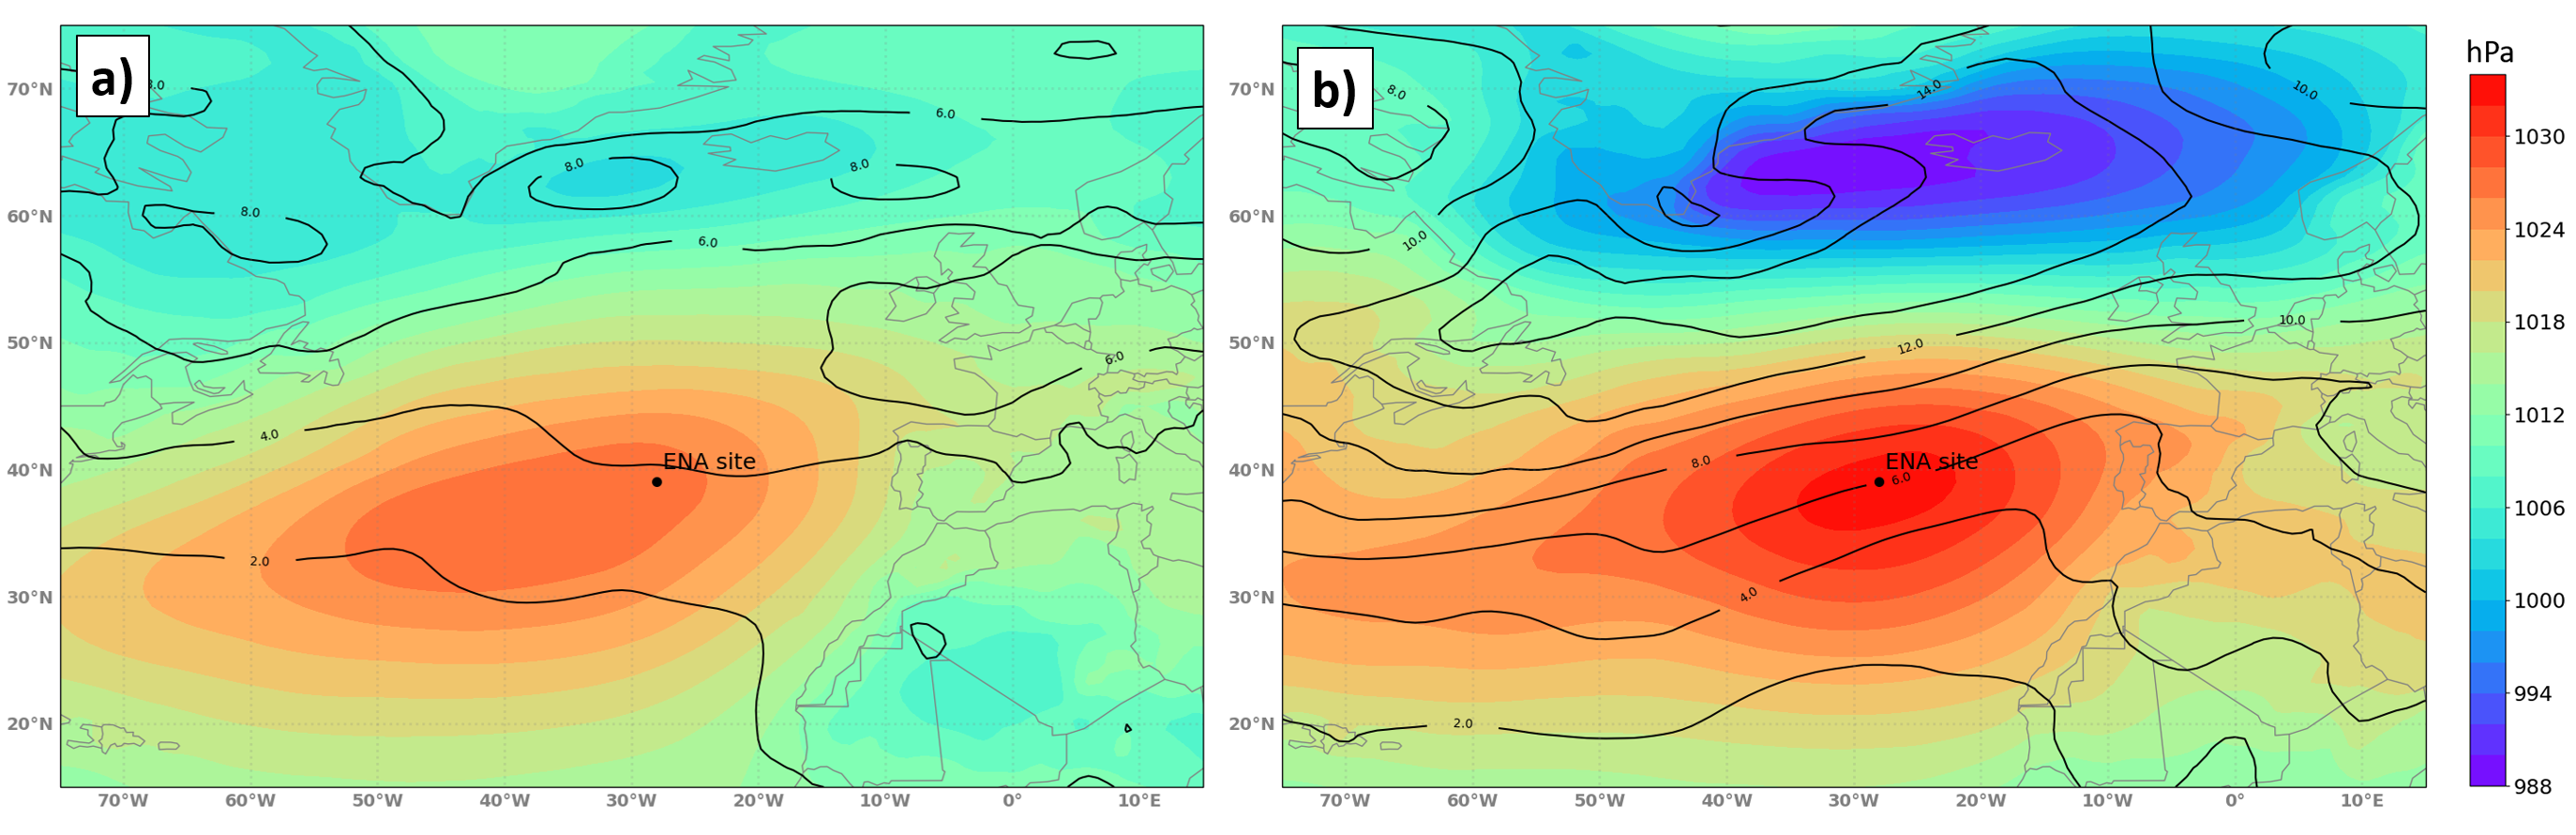 Average mean sea level pressure (MSLP) and standard deviation of MSLP across ACE-ENA